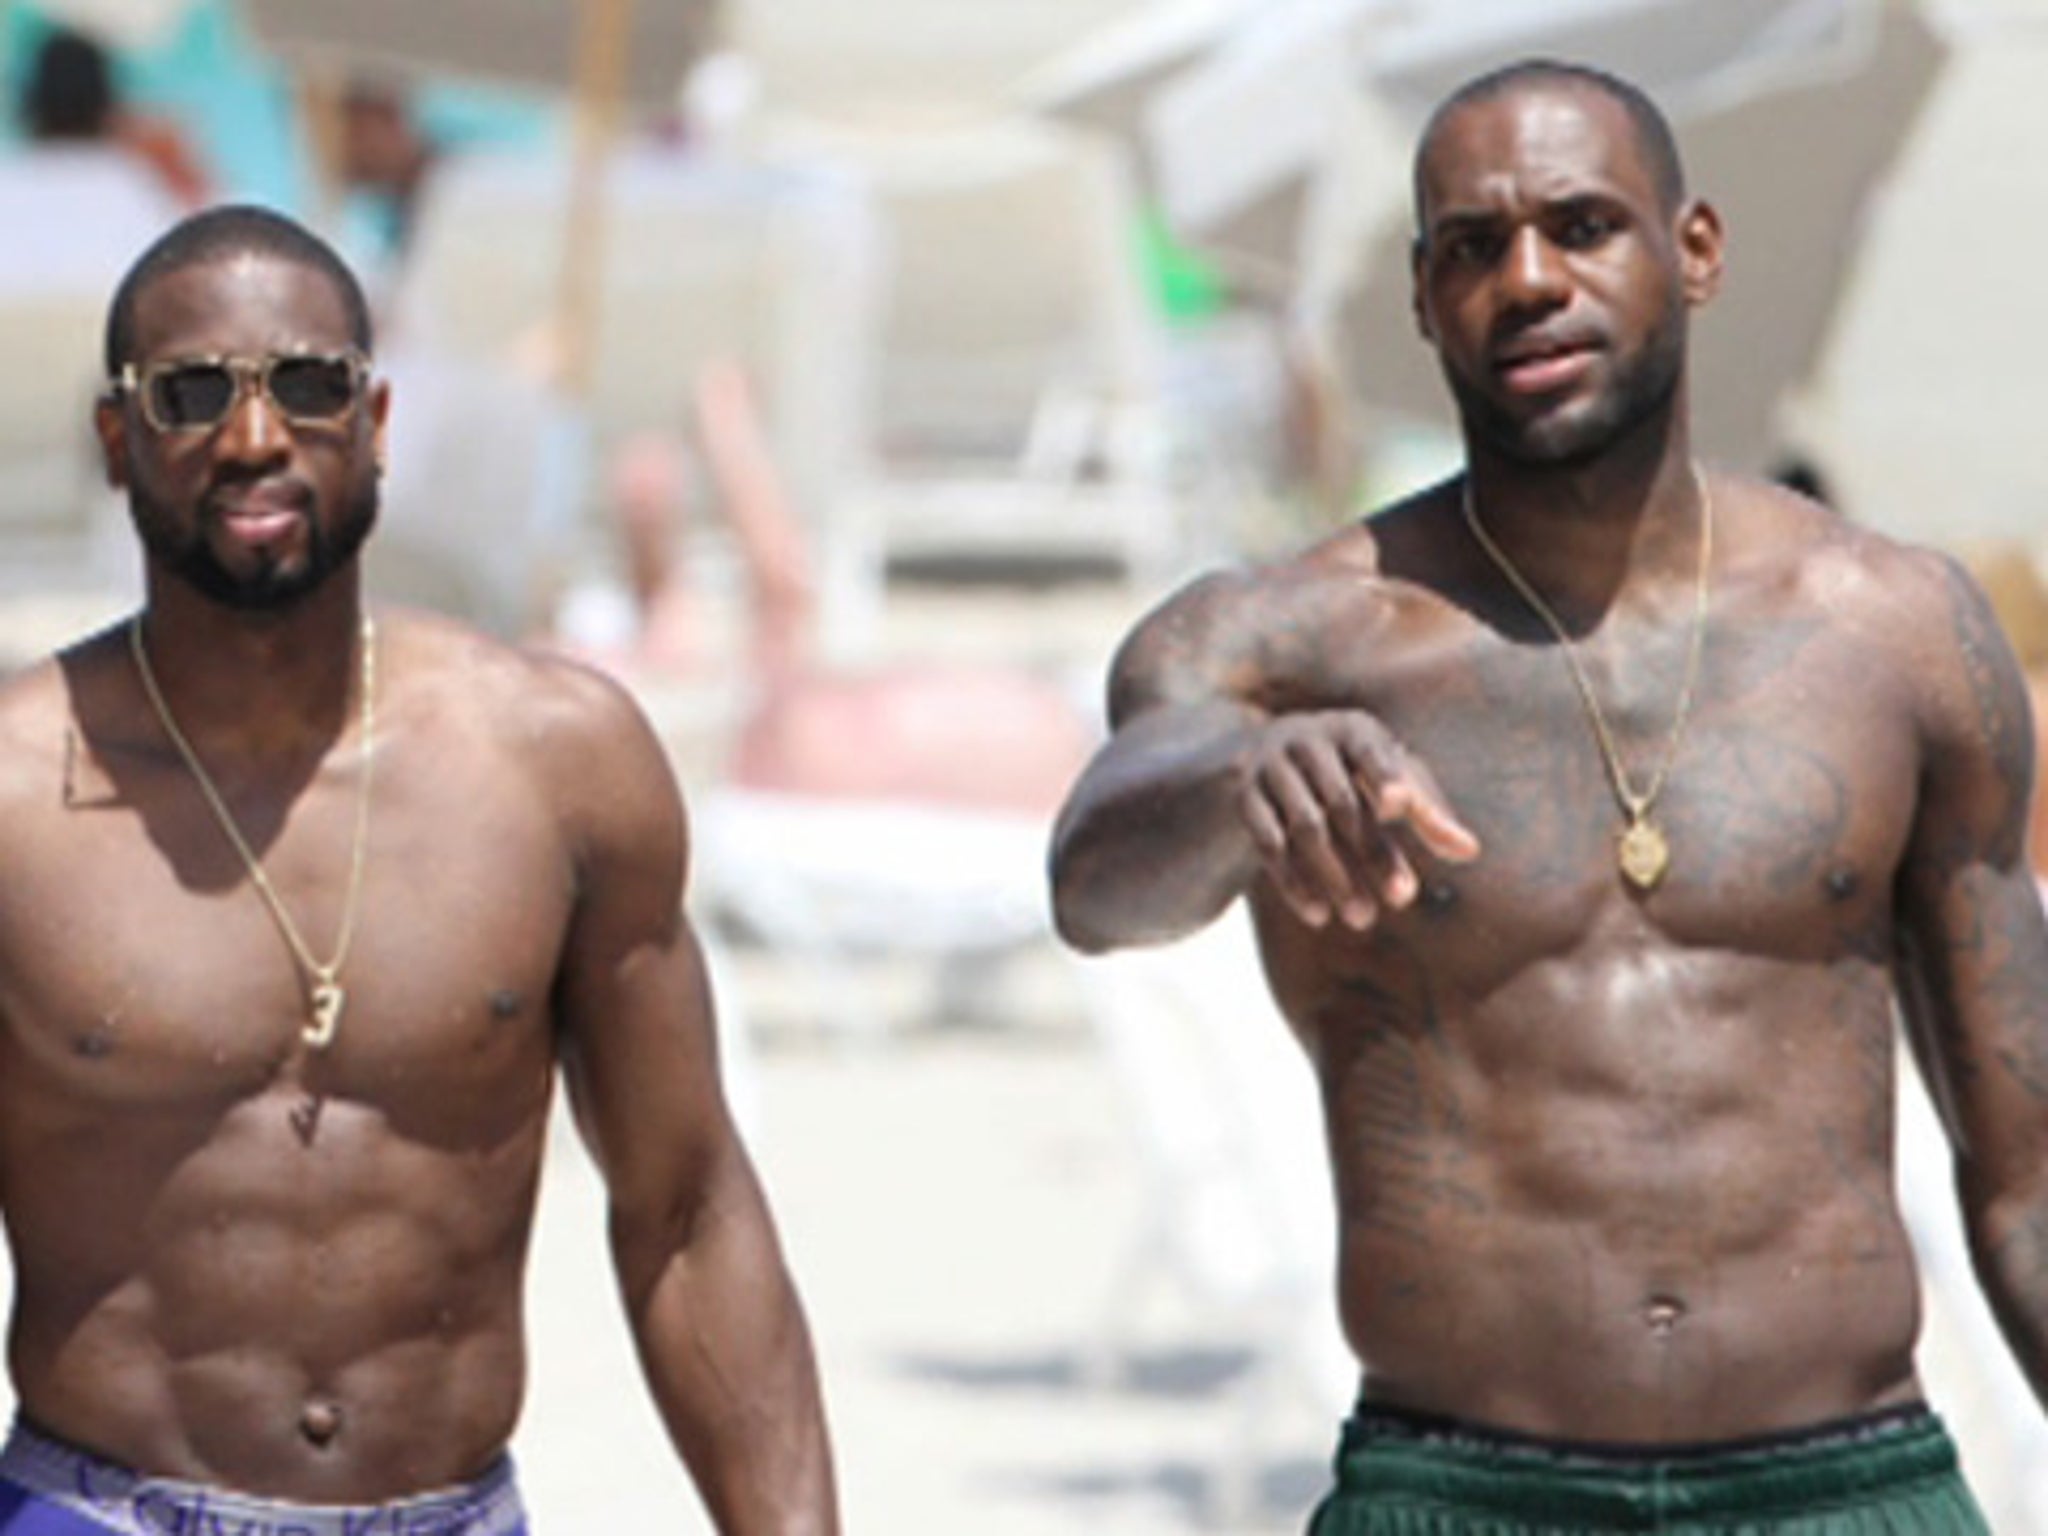 Dwyane Wade's Shirtless Pics: Looks So Buff Fans Wonder About NBA